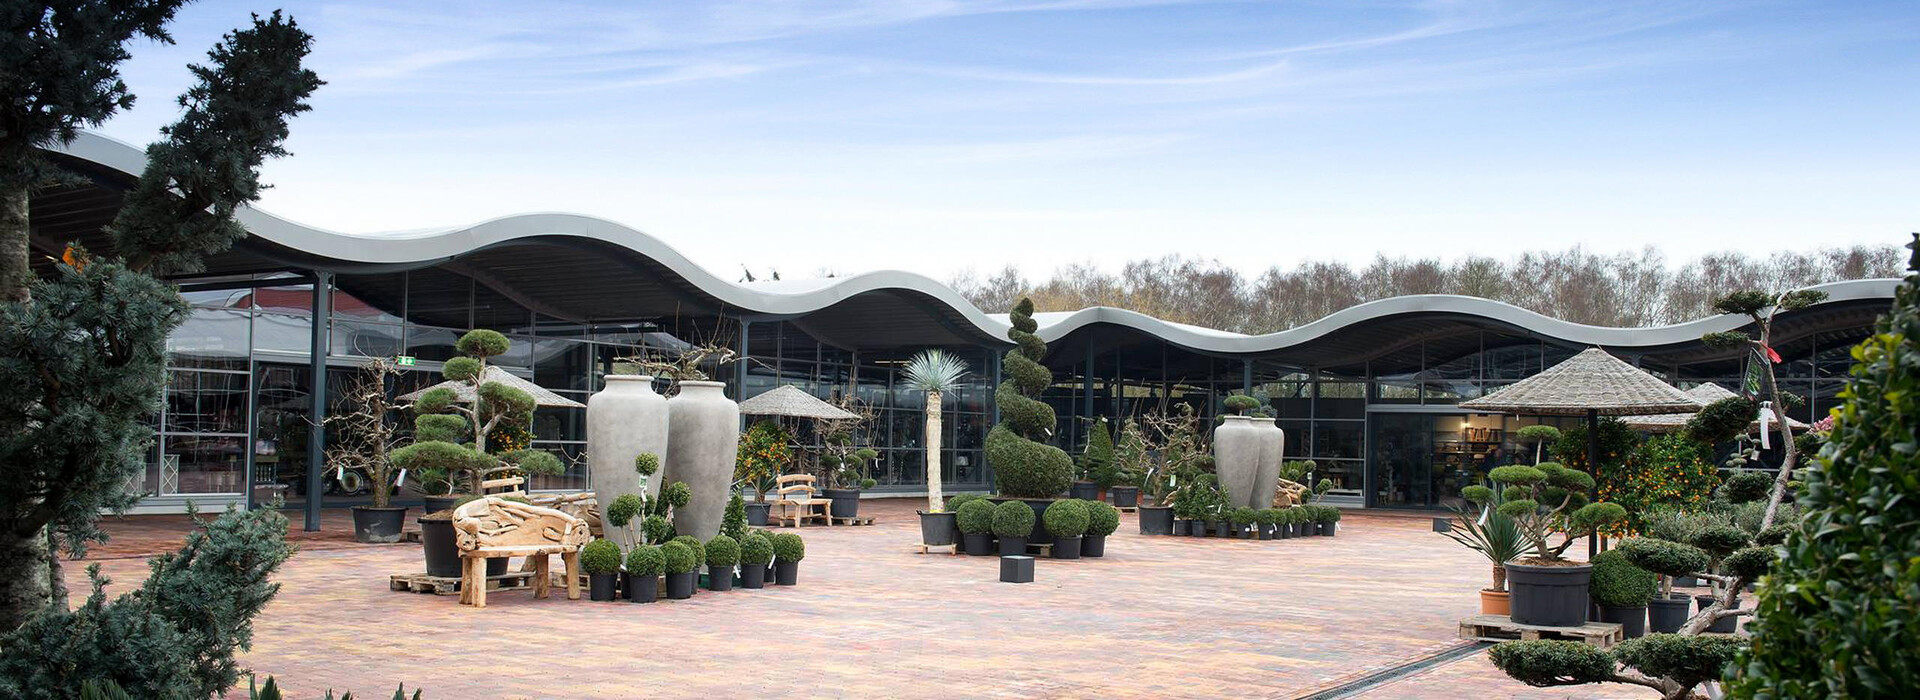 Expansion Wolters Gardencenter, Overdinkel (the Netherlands) 2016